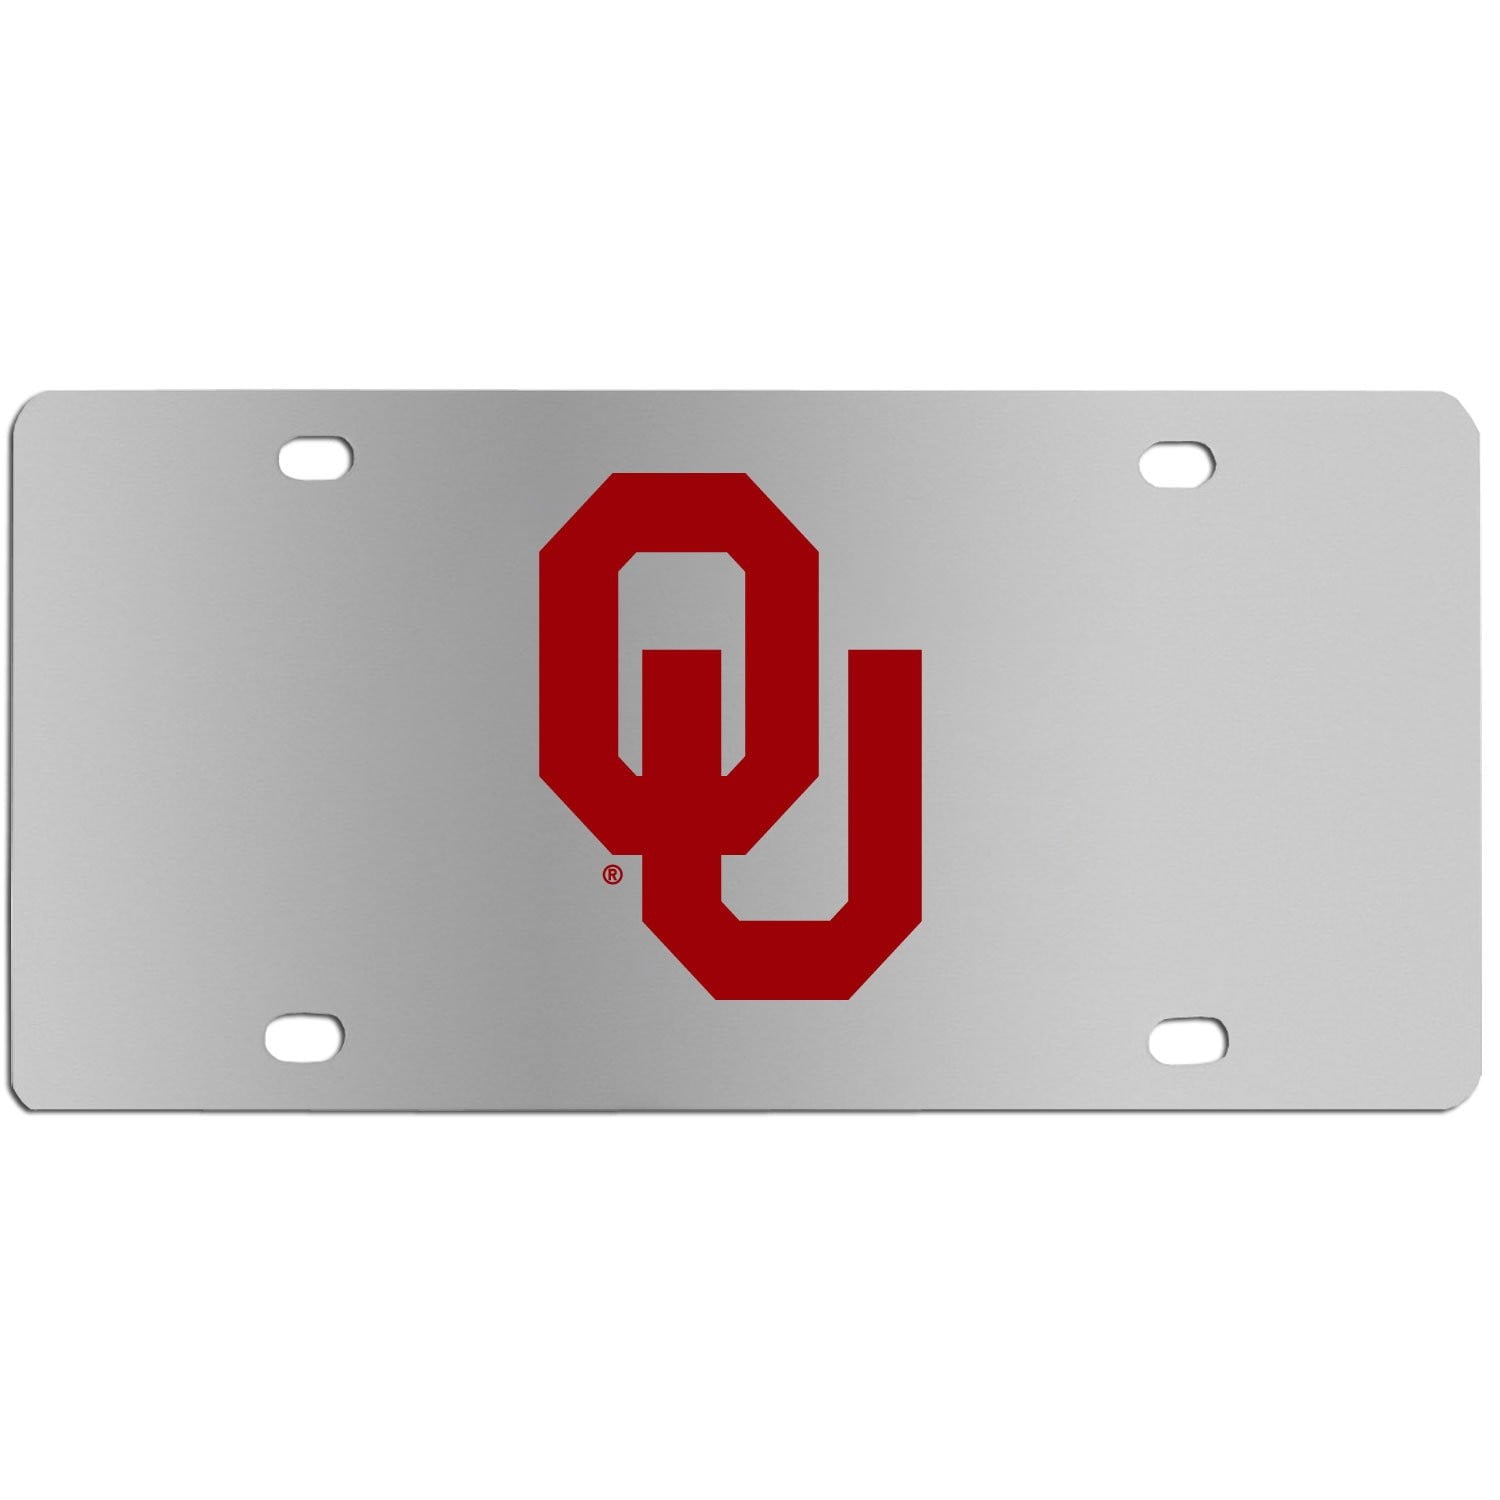 Oklahoma Sooners Steel License Plate Wall Plaque